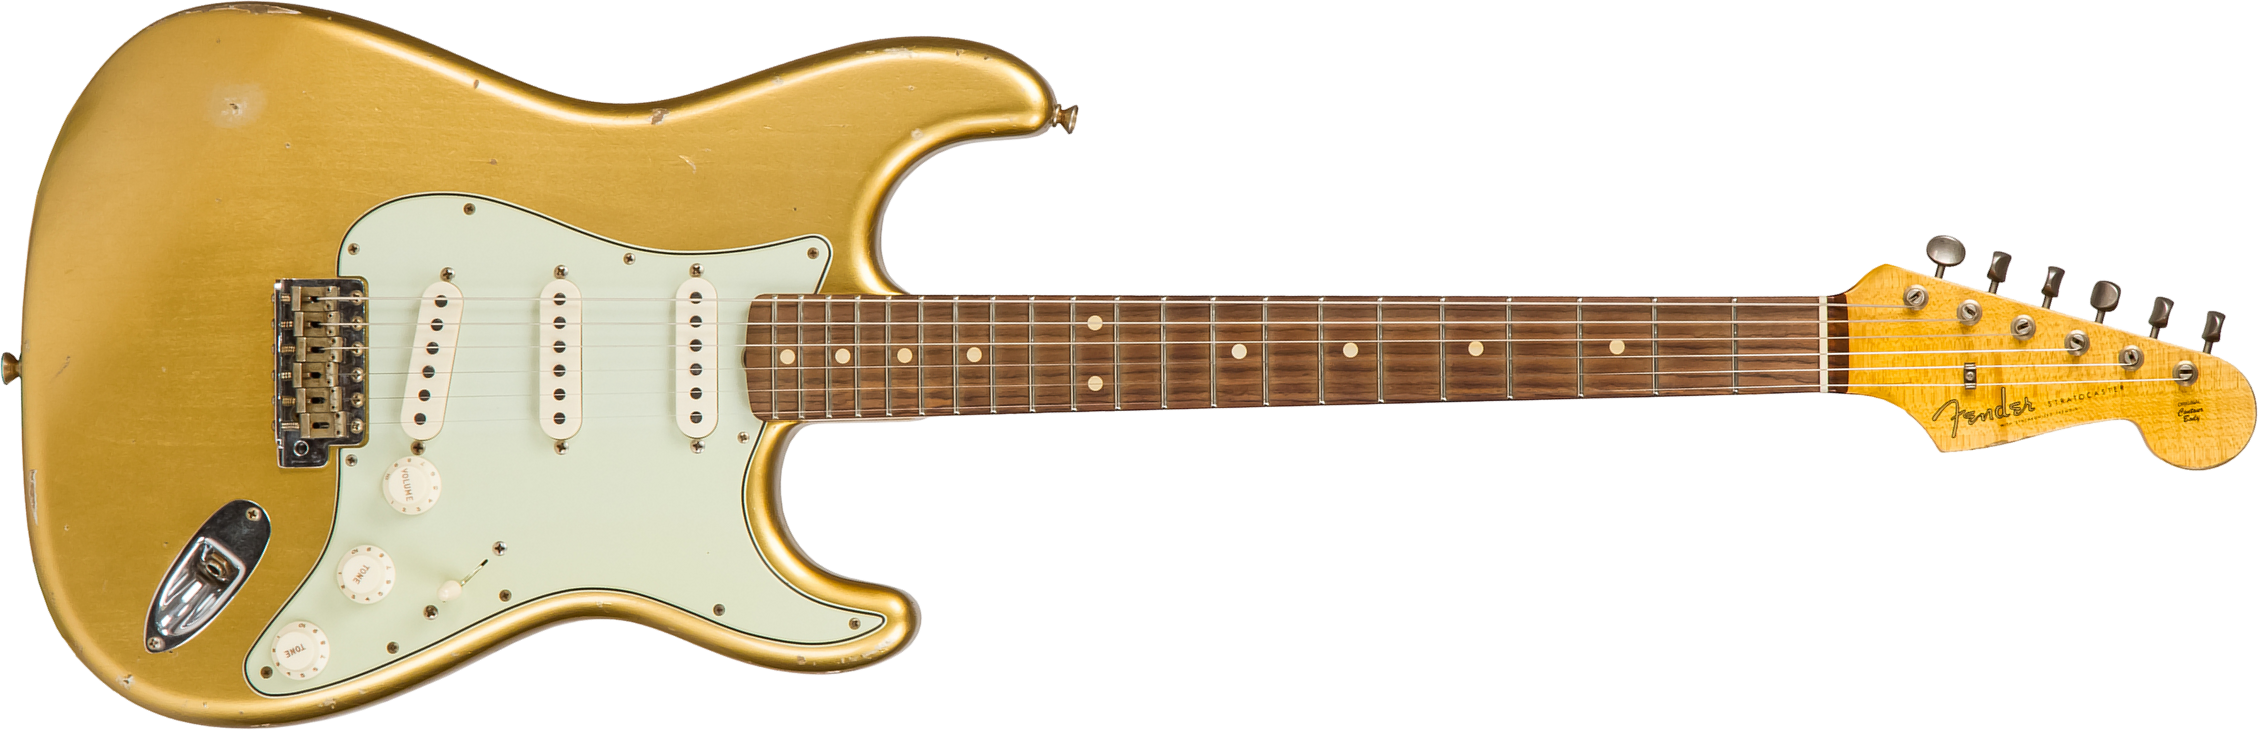 Fender Custom Shop Strat 1960 Rw #cz544406 - Relic Aztec Gold - E-Gitarre in Str-Form - Main picture